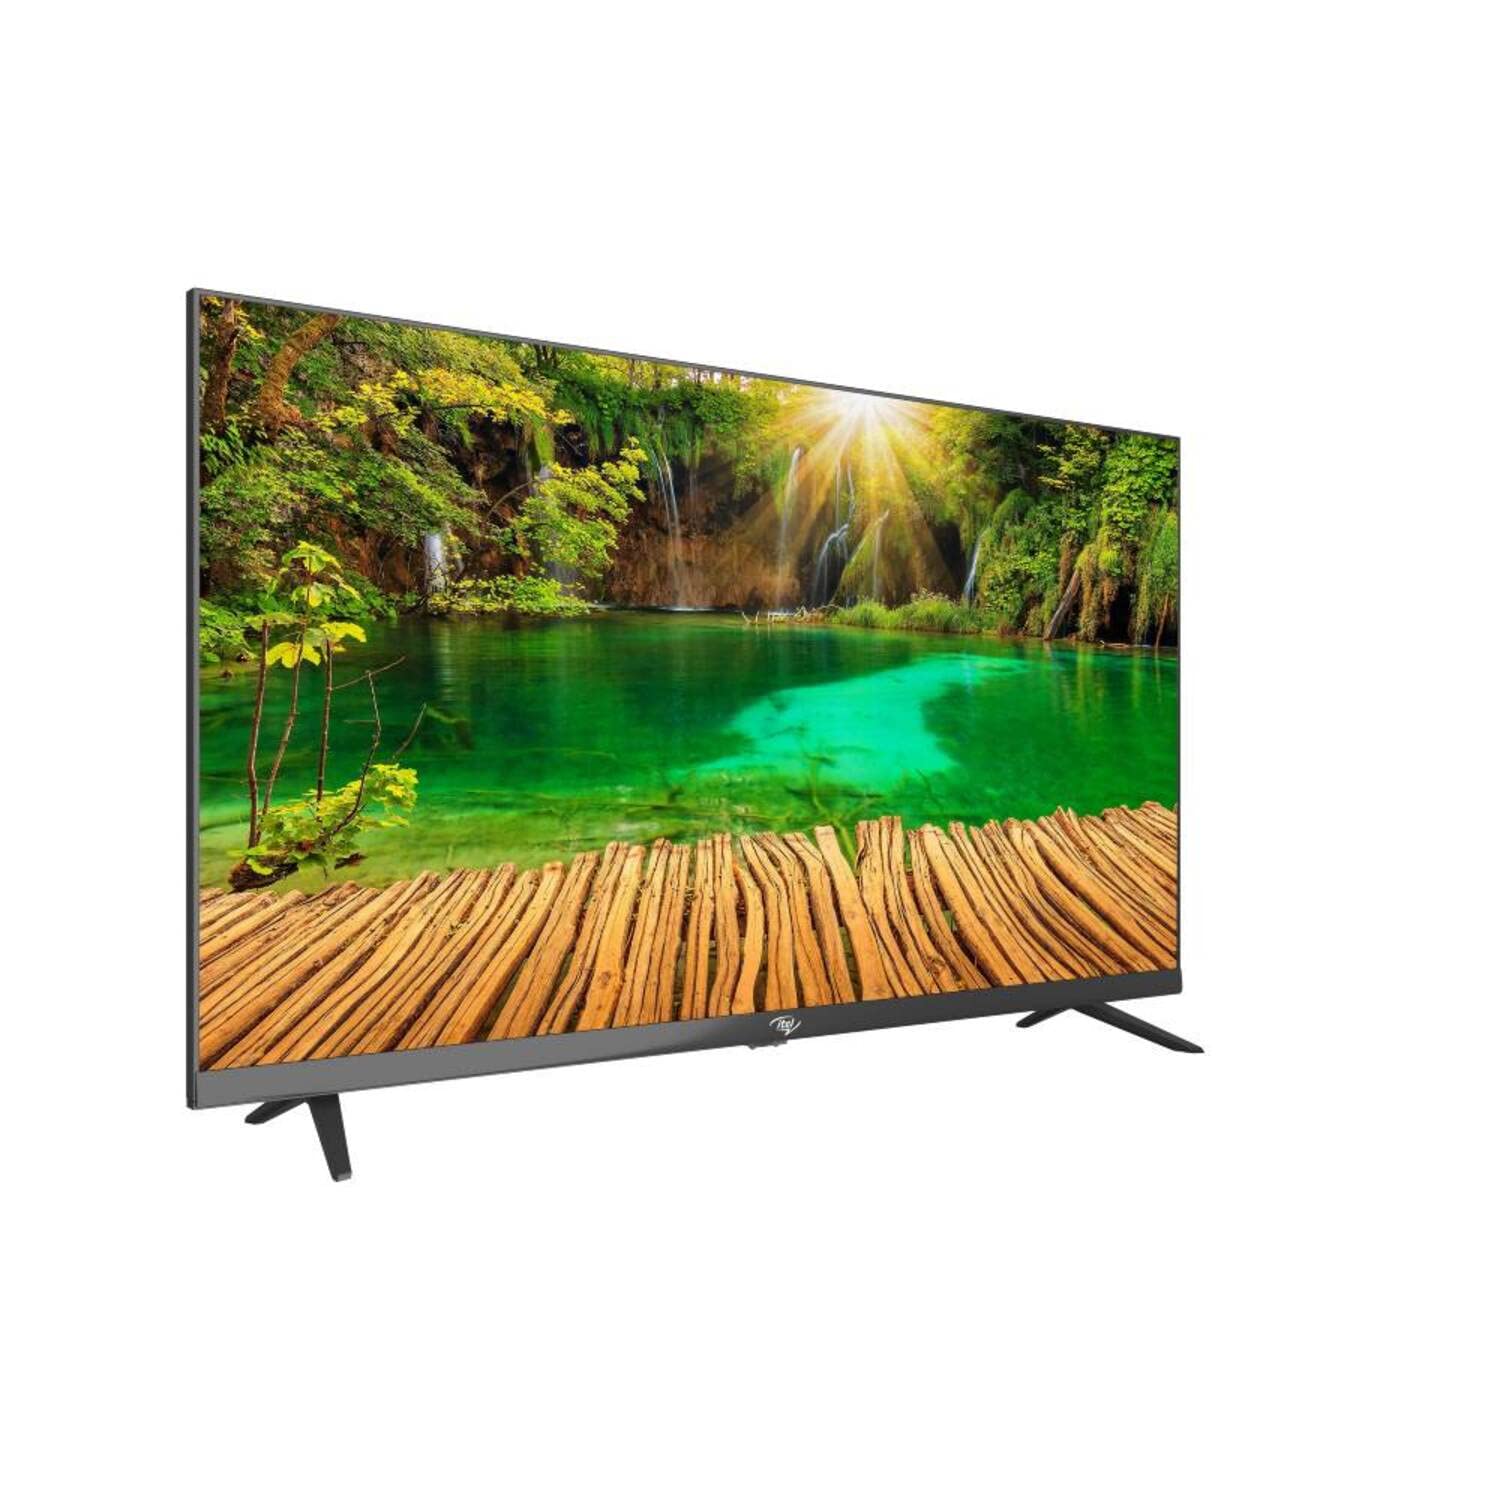 Itel 109.2 cm (43 Inch) (4K) Ultra HD LED Smart TV Black (G4334IE)